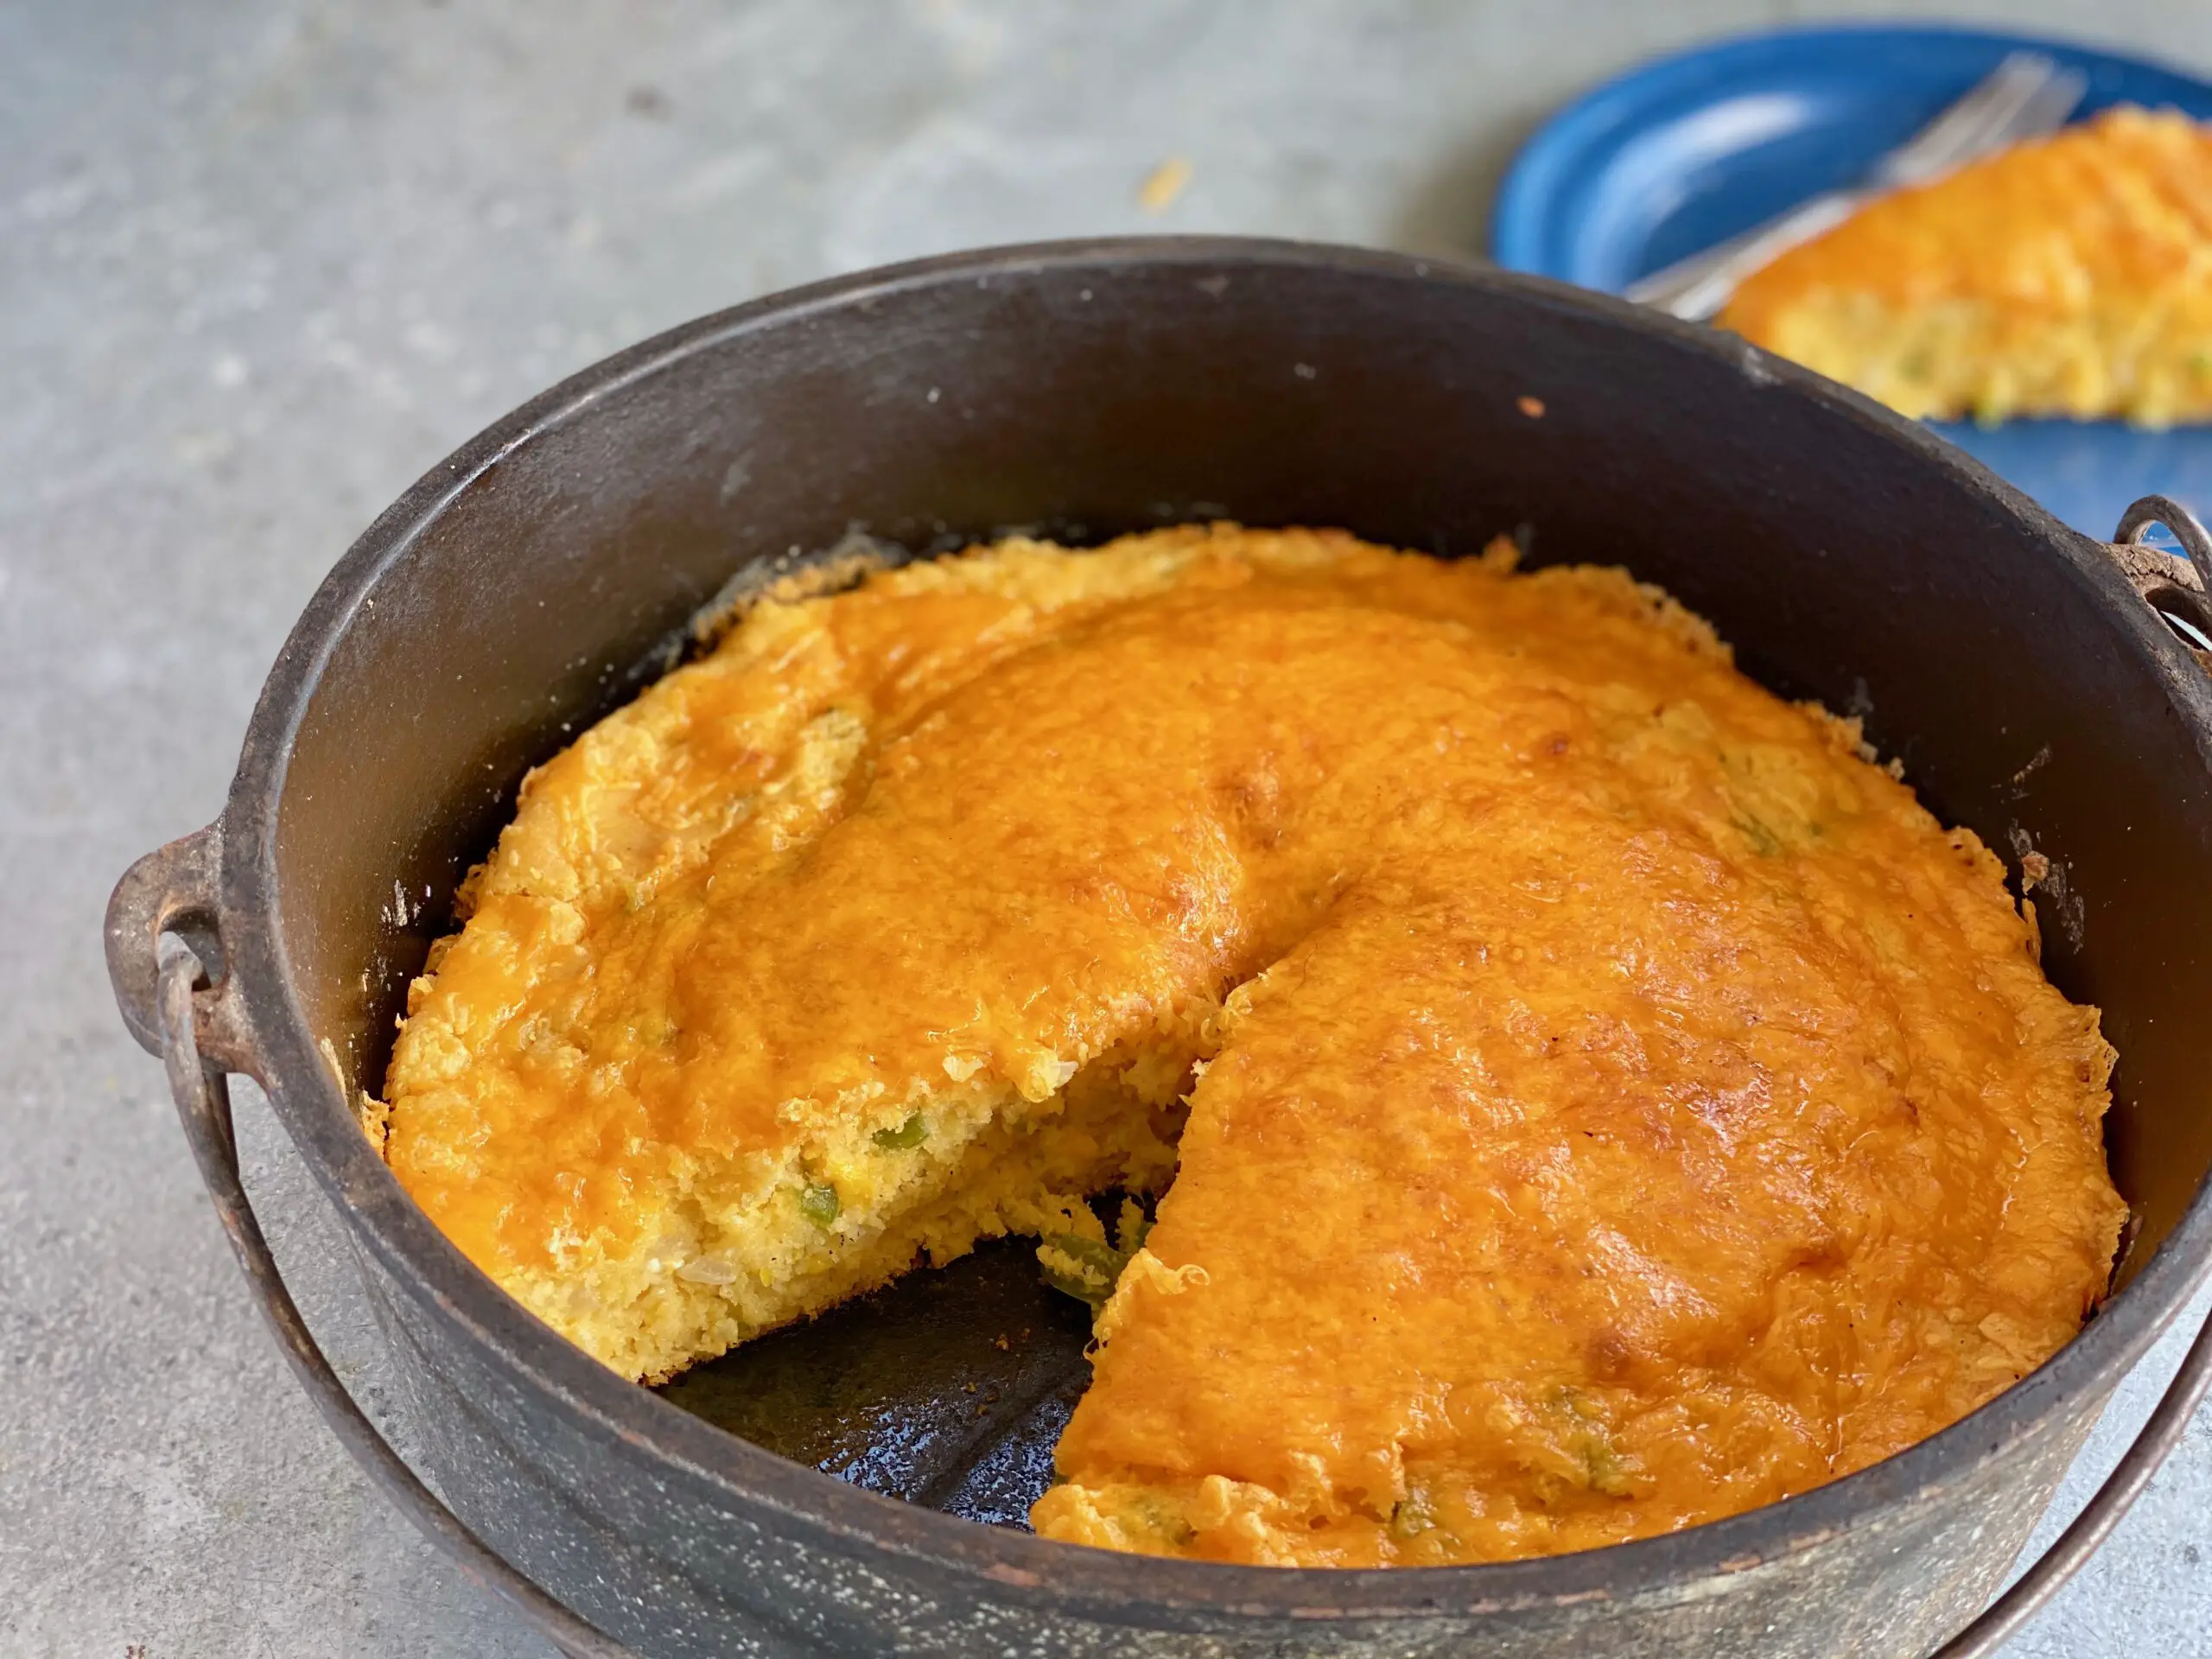 File:Cornbread in cast iron pan.jpg - Wikipedia